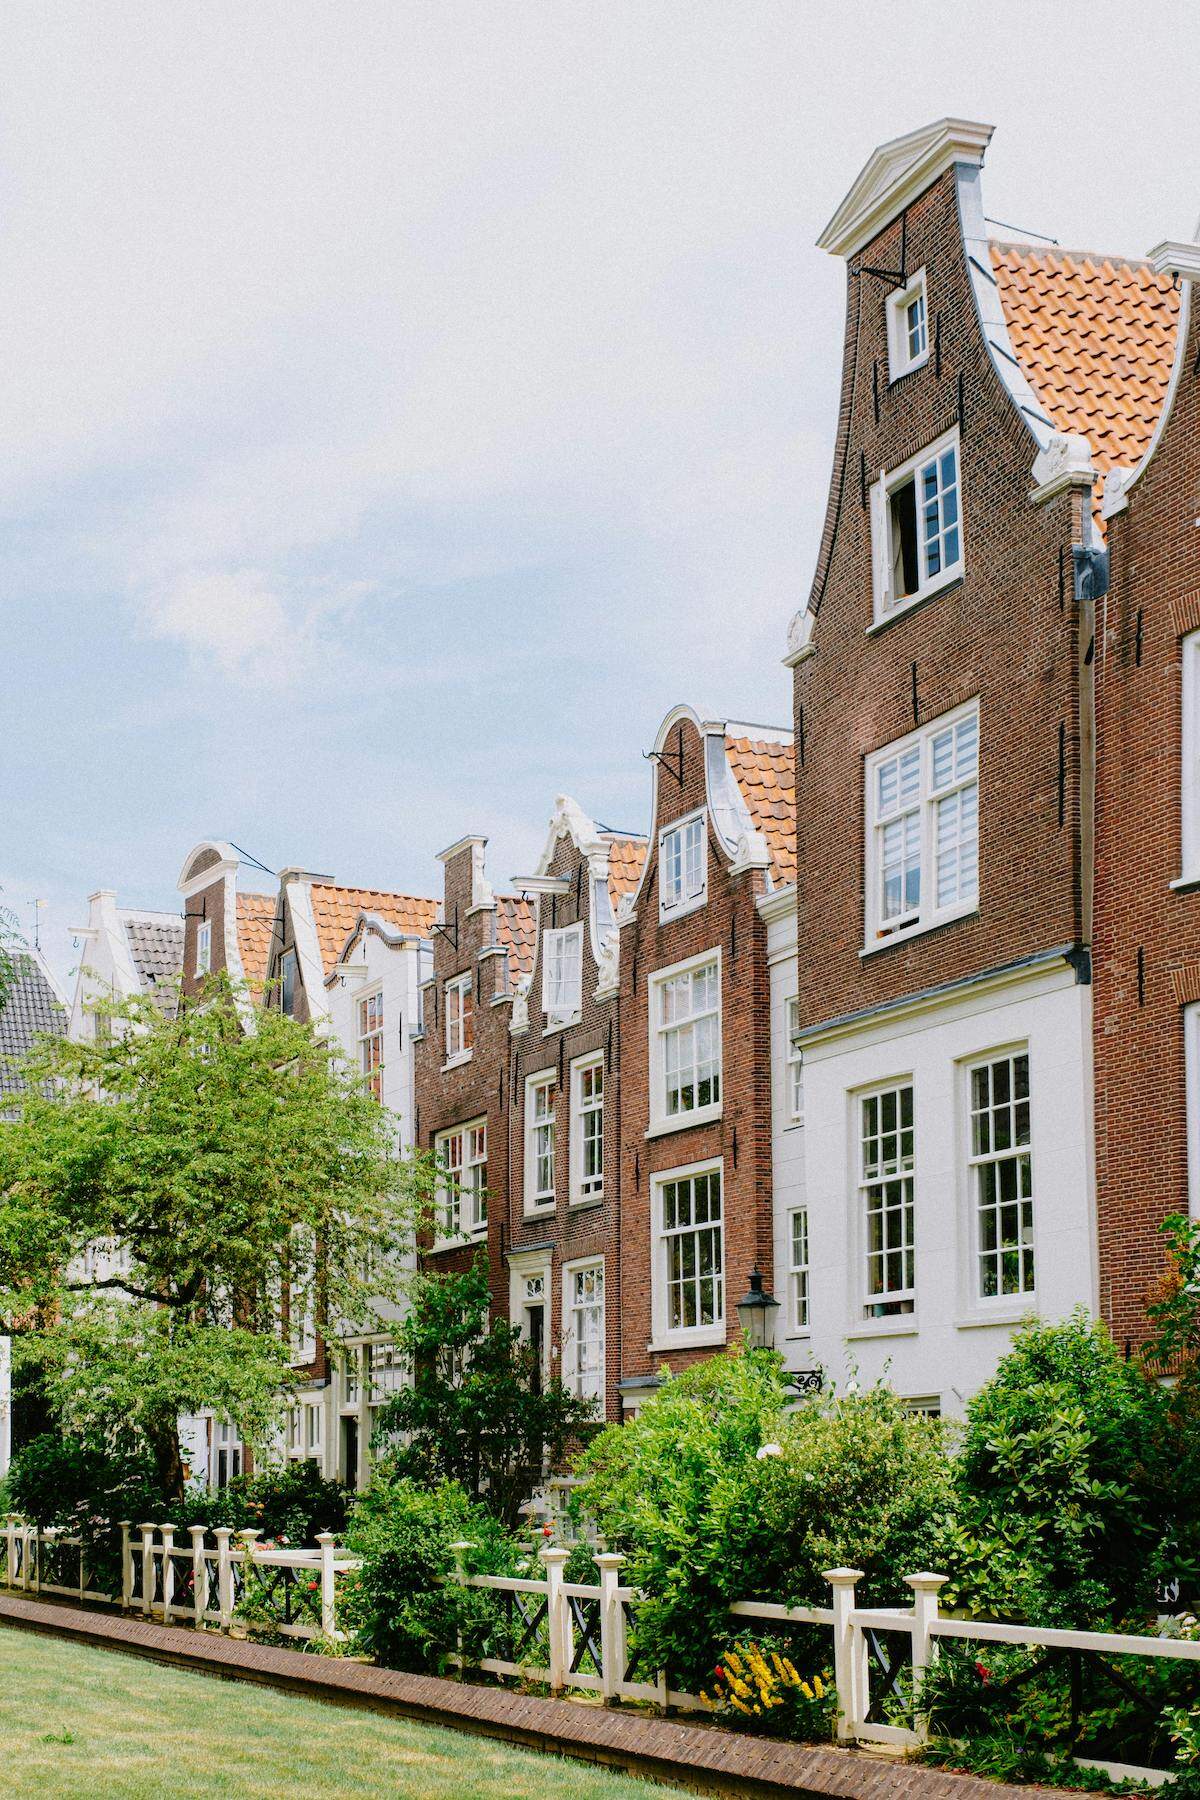 historic homes within the Begijnhof in Amsterdam